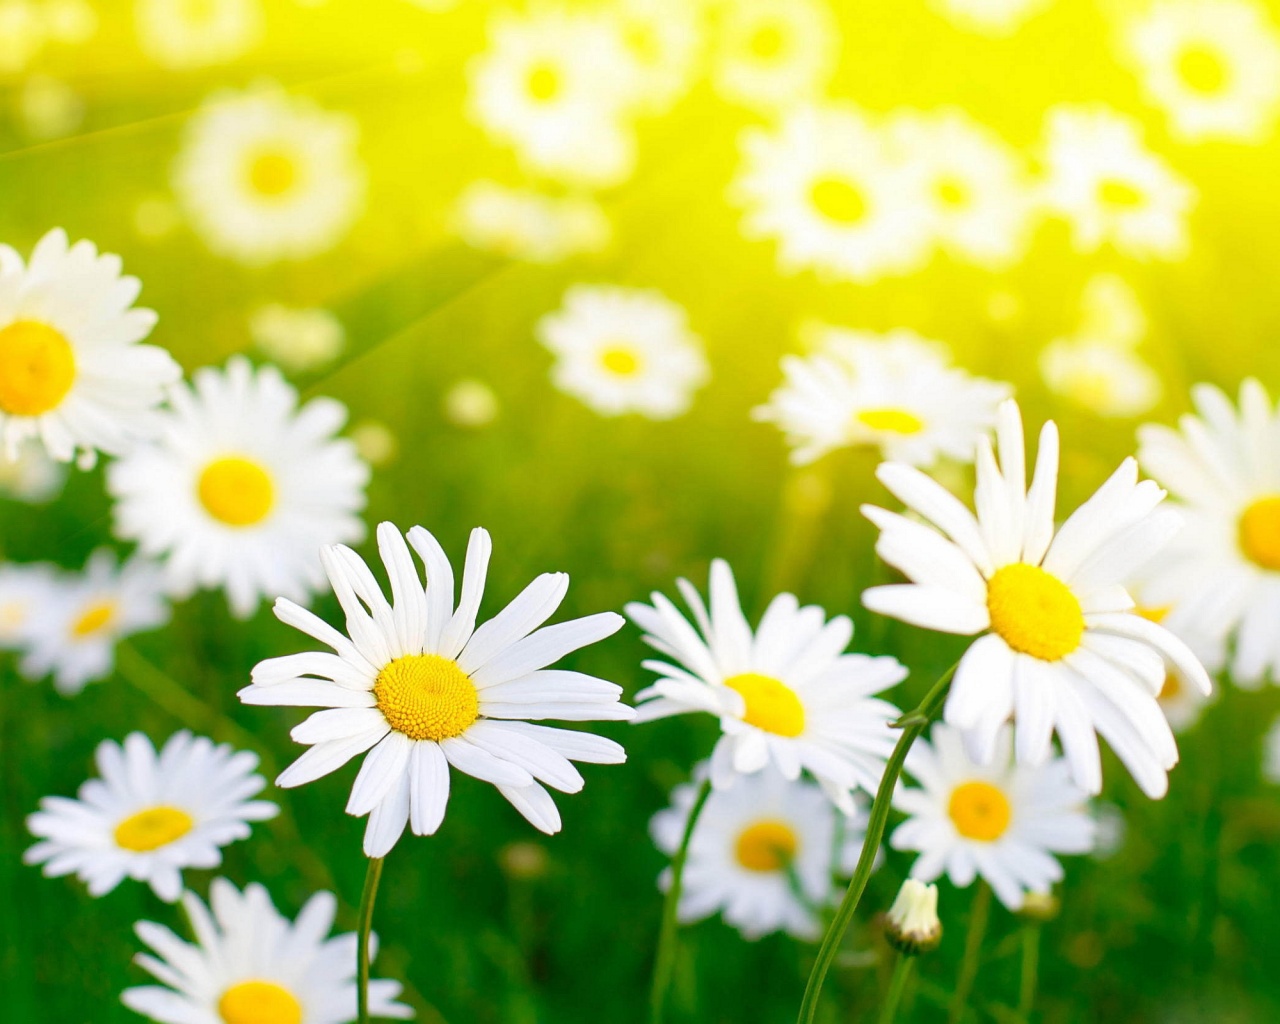 White daisies field